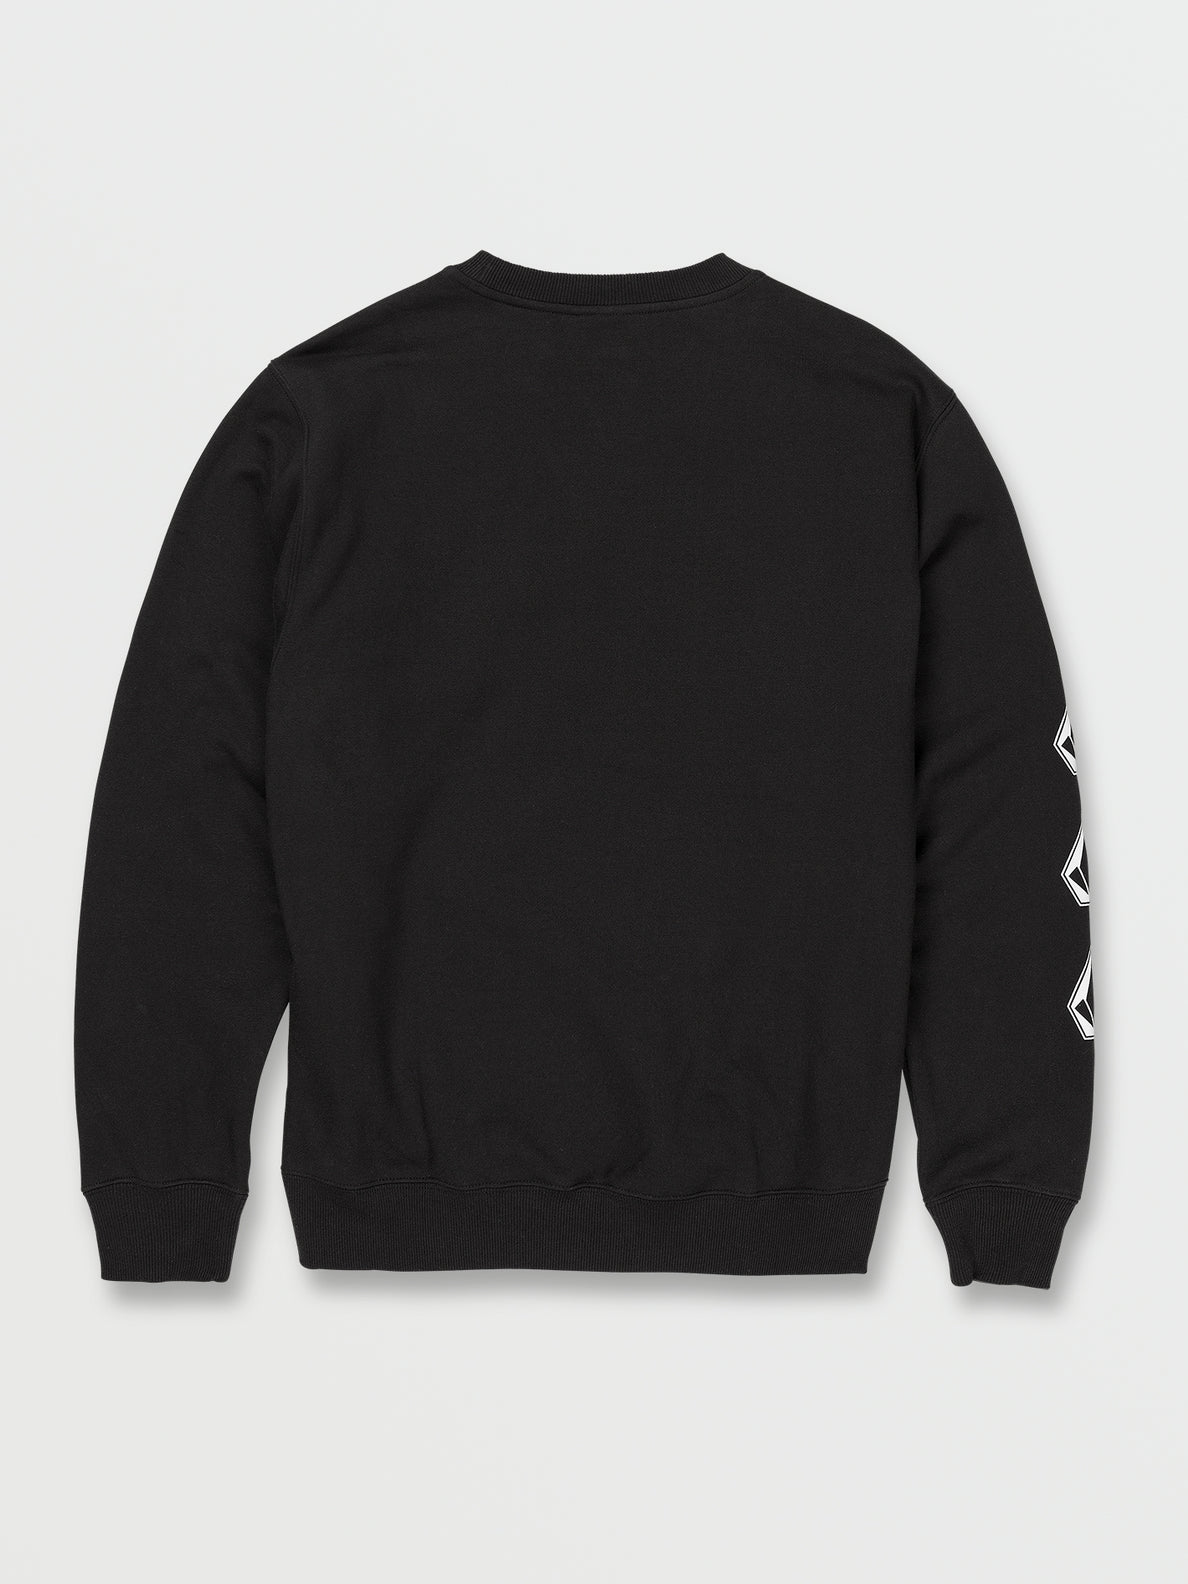 Iconic Stone Crew Sweatshirt - Black (A4642200_BLK) [B]